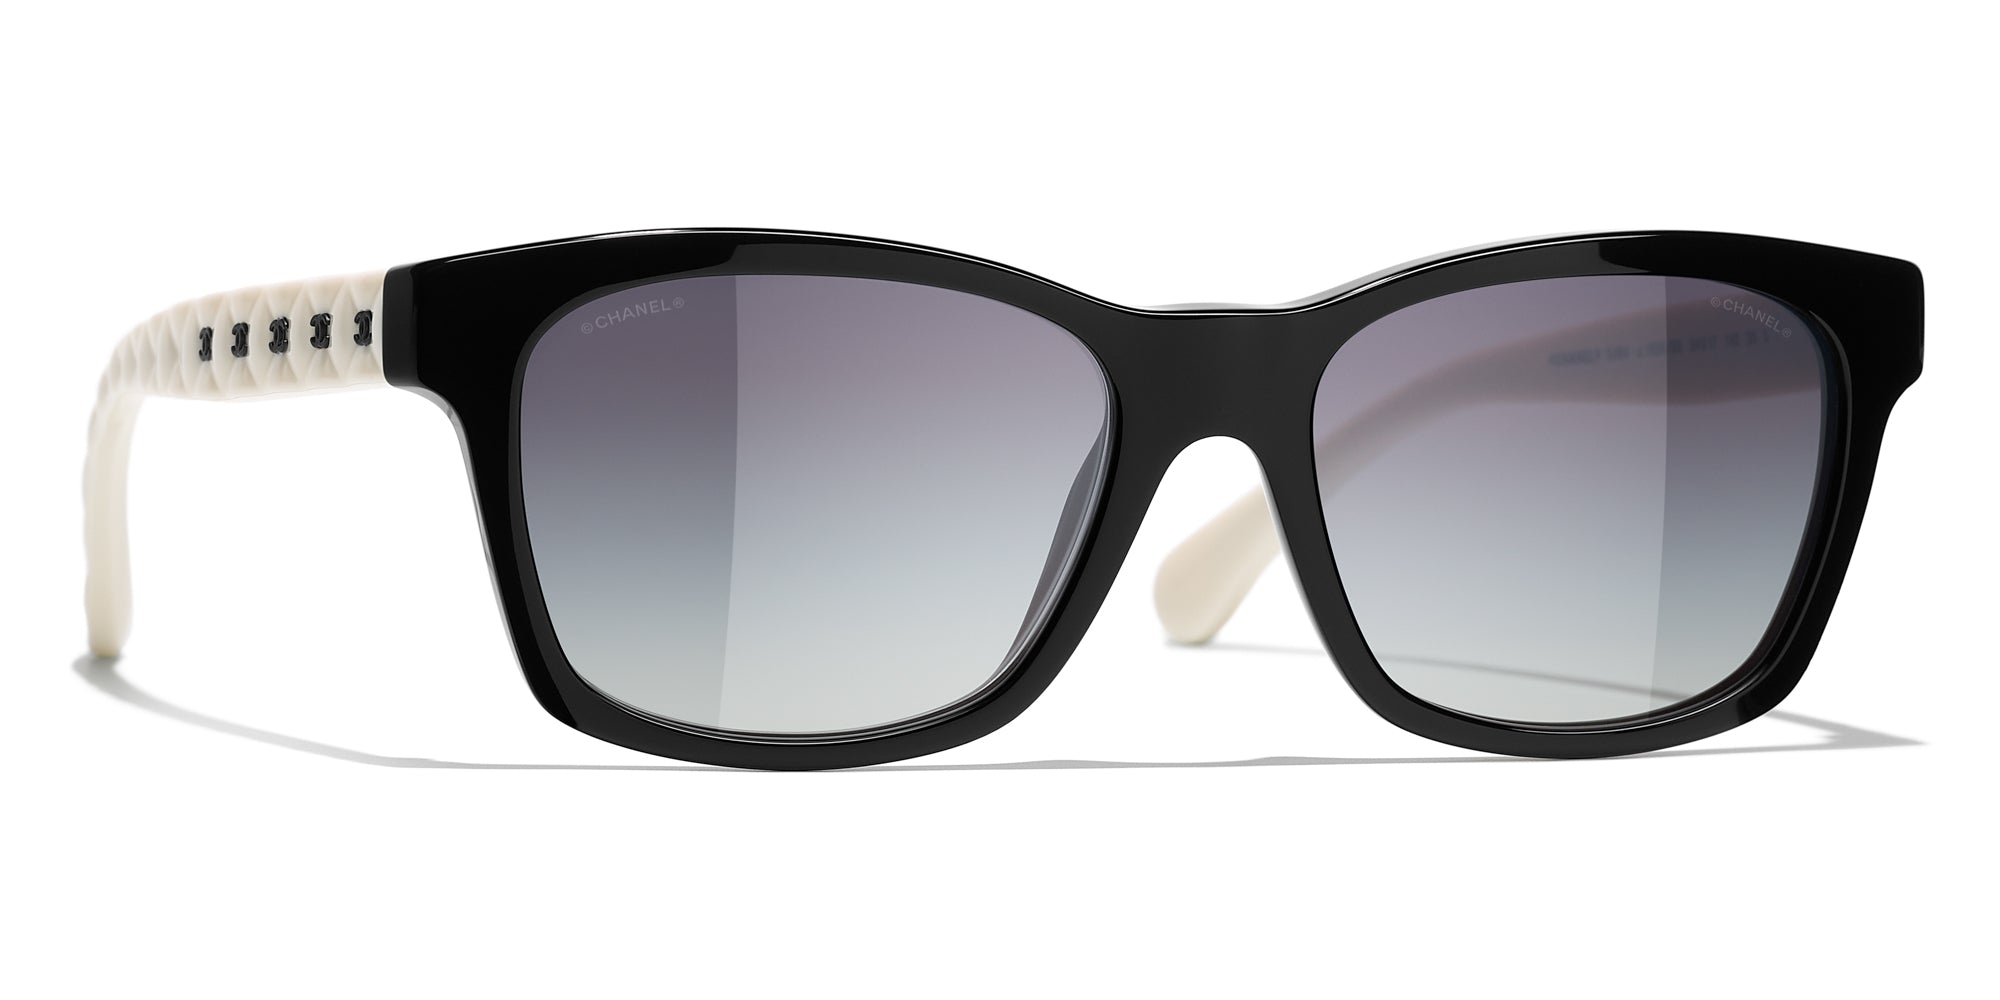 Chanel Square Sunglasses - Acetate, Black - Polarized - UV Protected - Women's Sunglasses - 5484 C760/S8